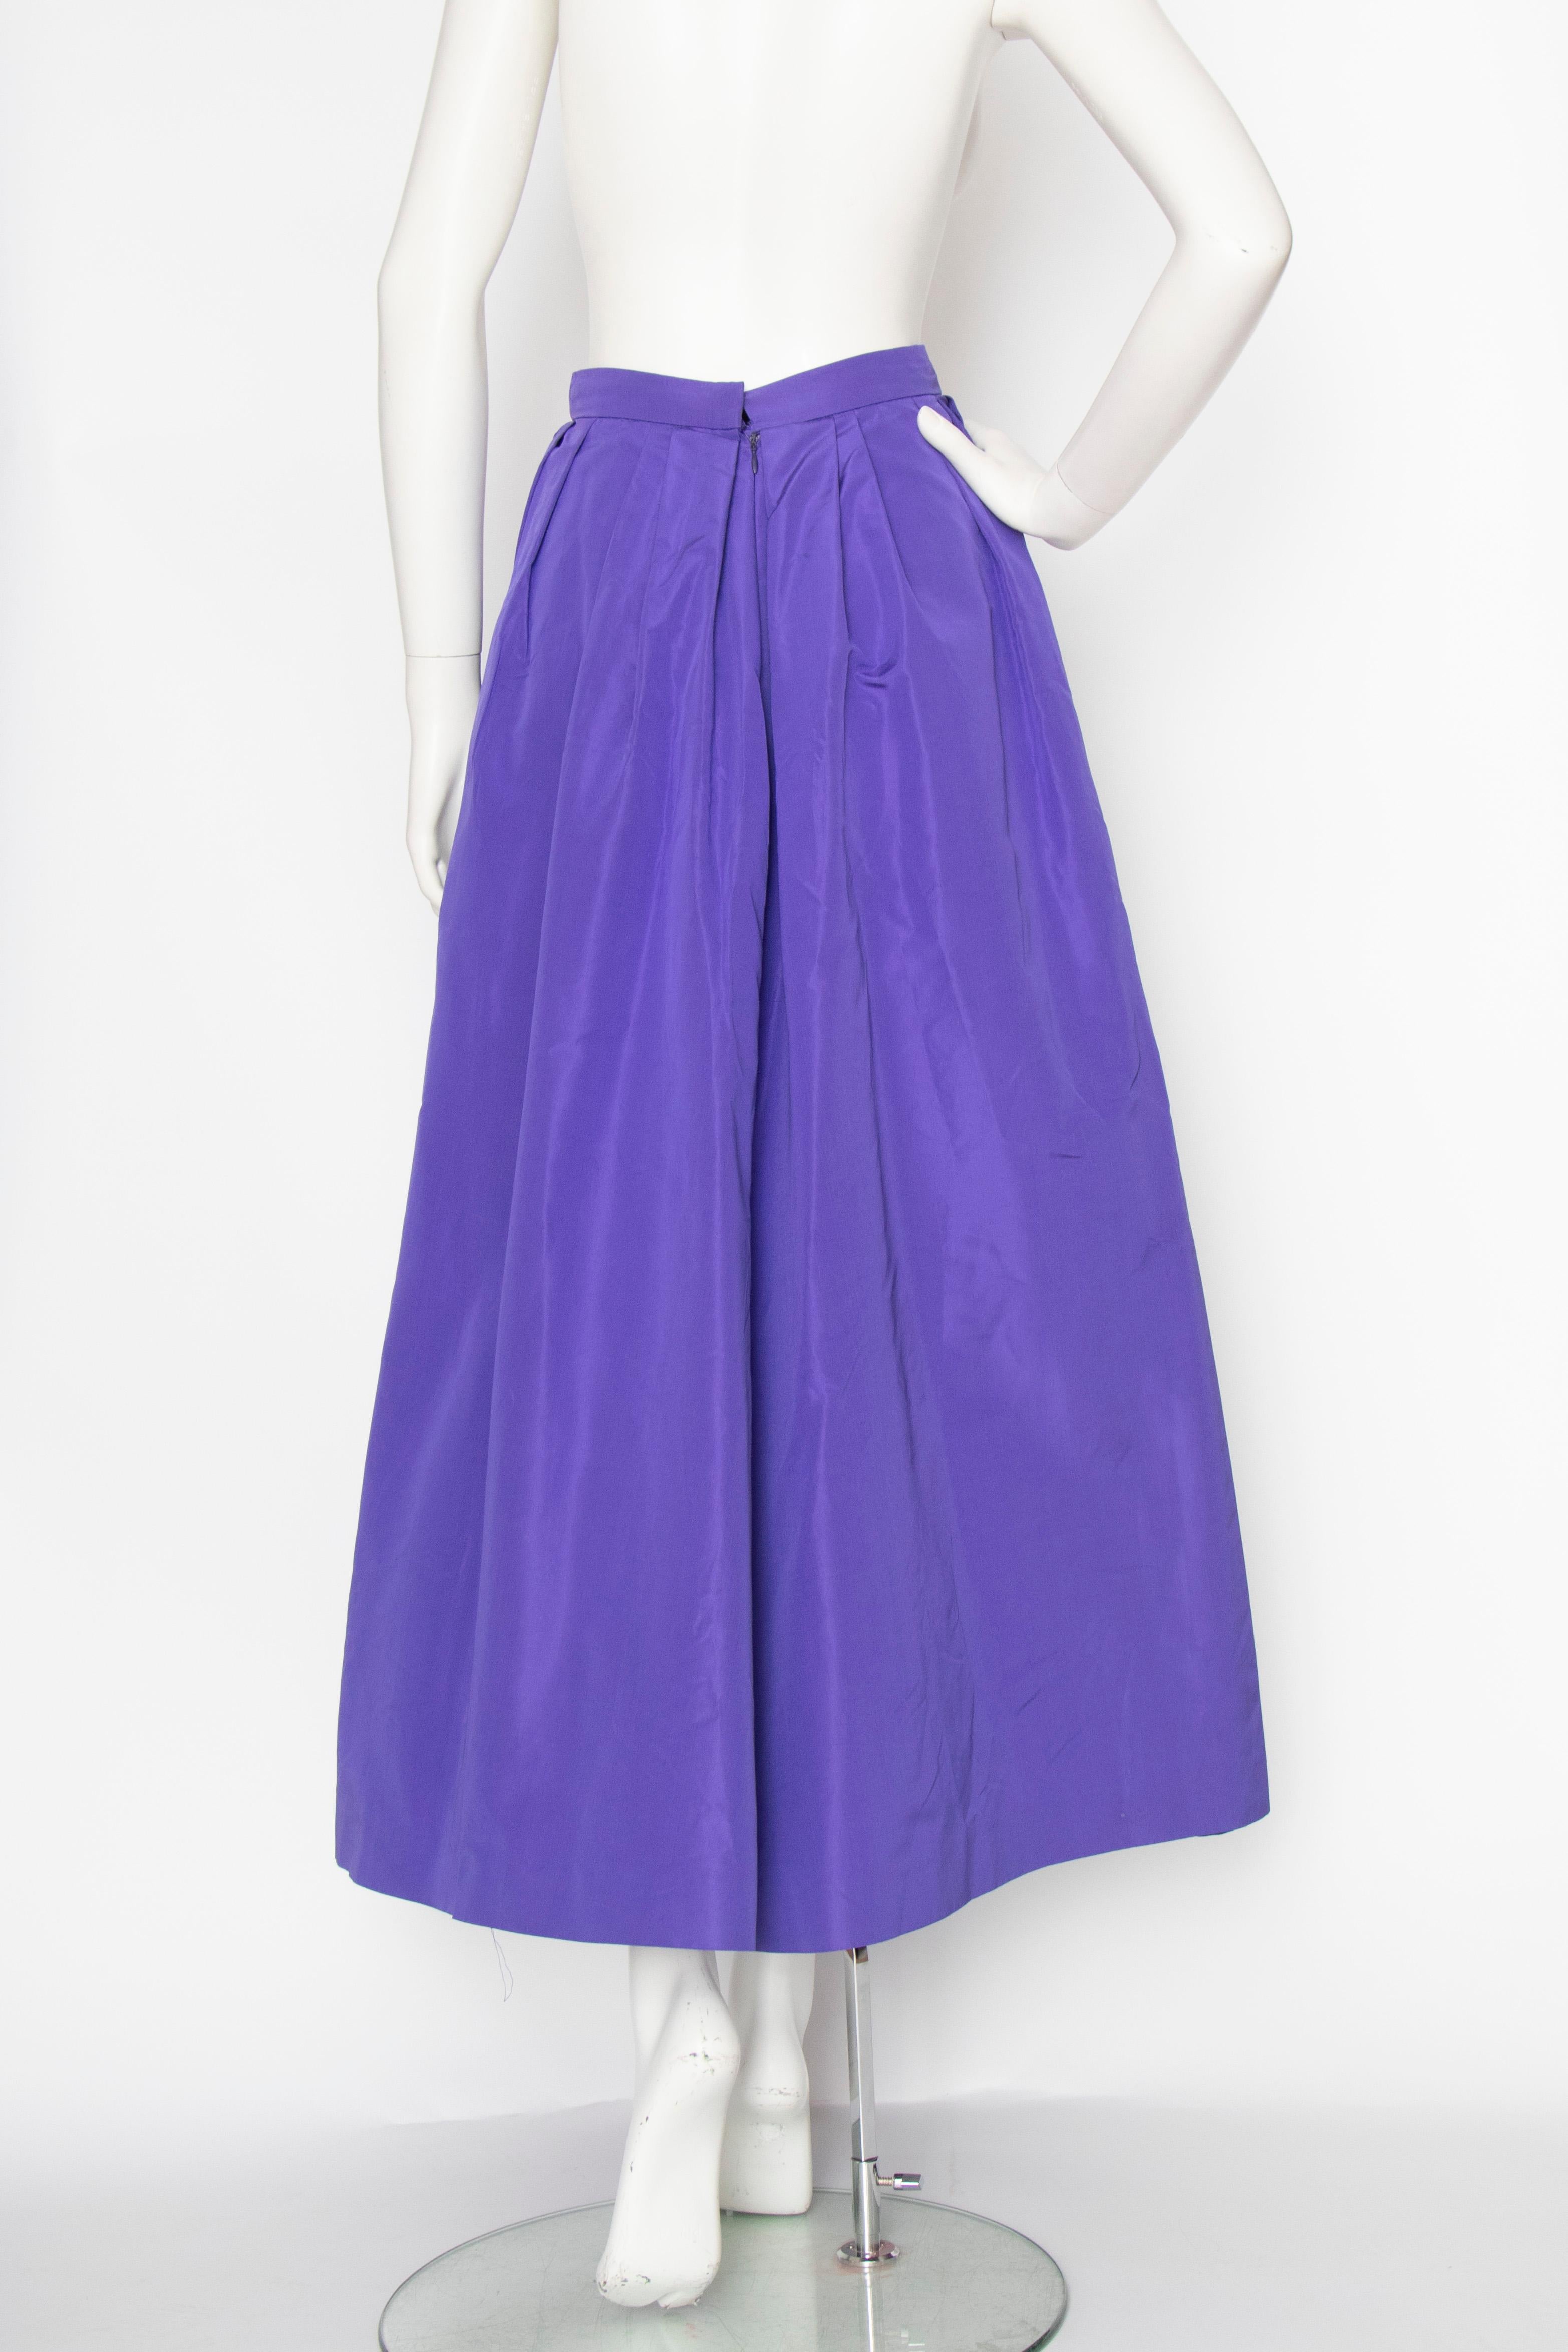 A 1980s Vintage Yves Saint Laurent Rive Gauche Purple Silk Taffeta Skirt  1